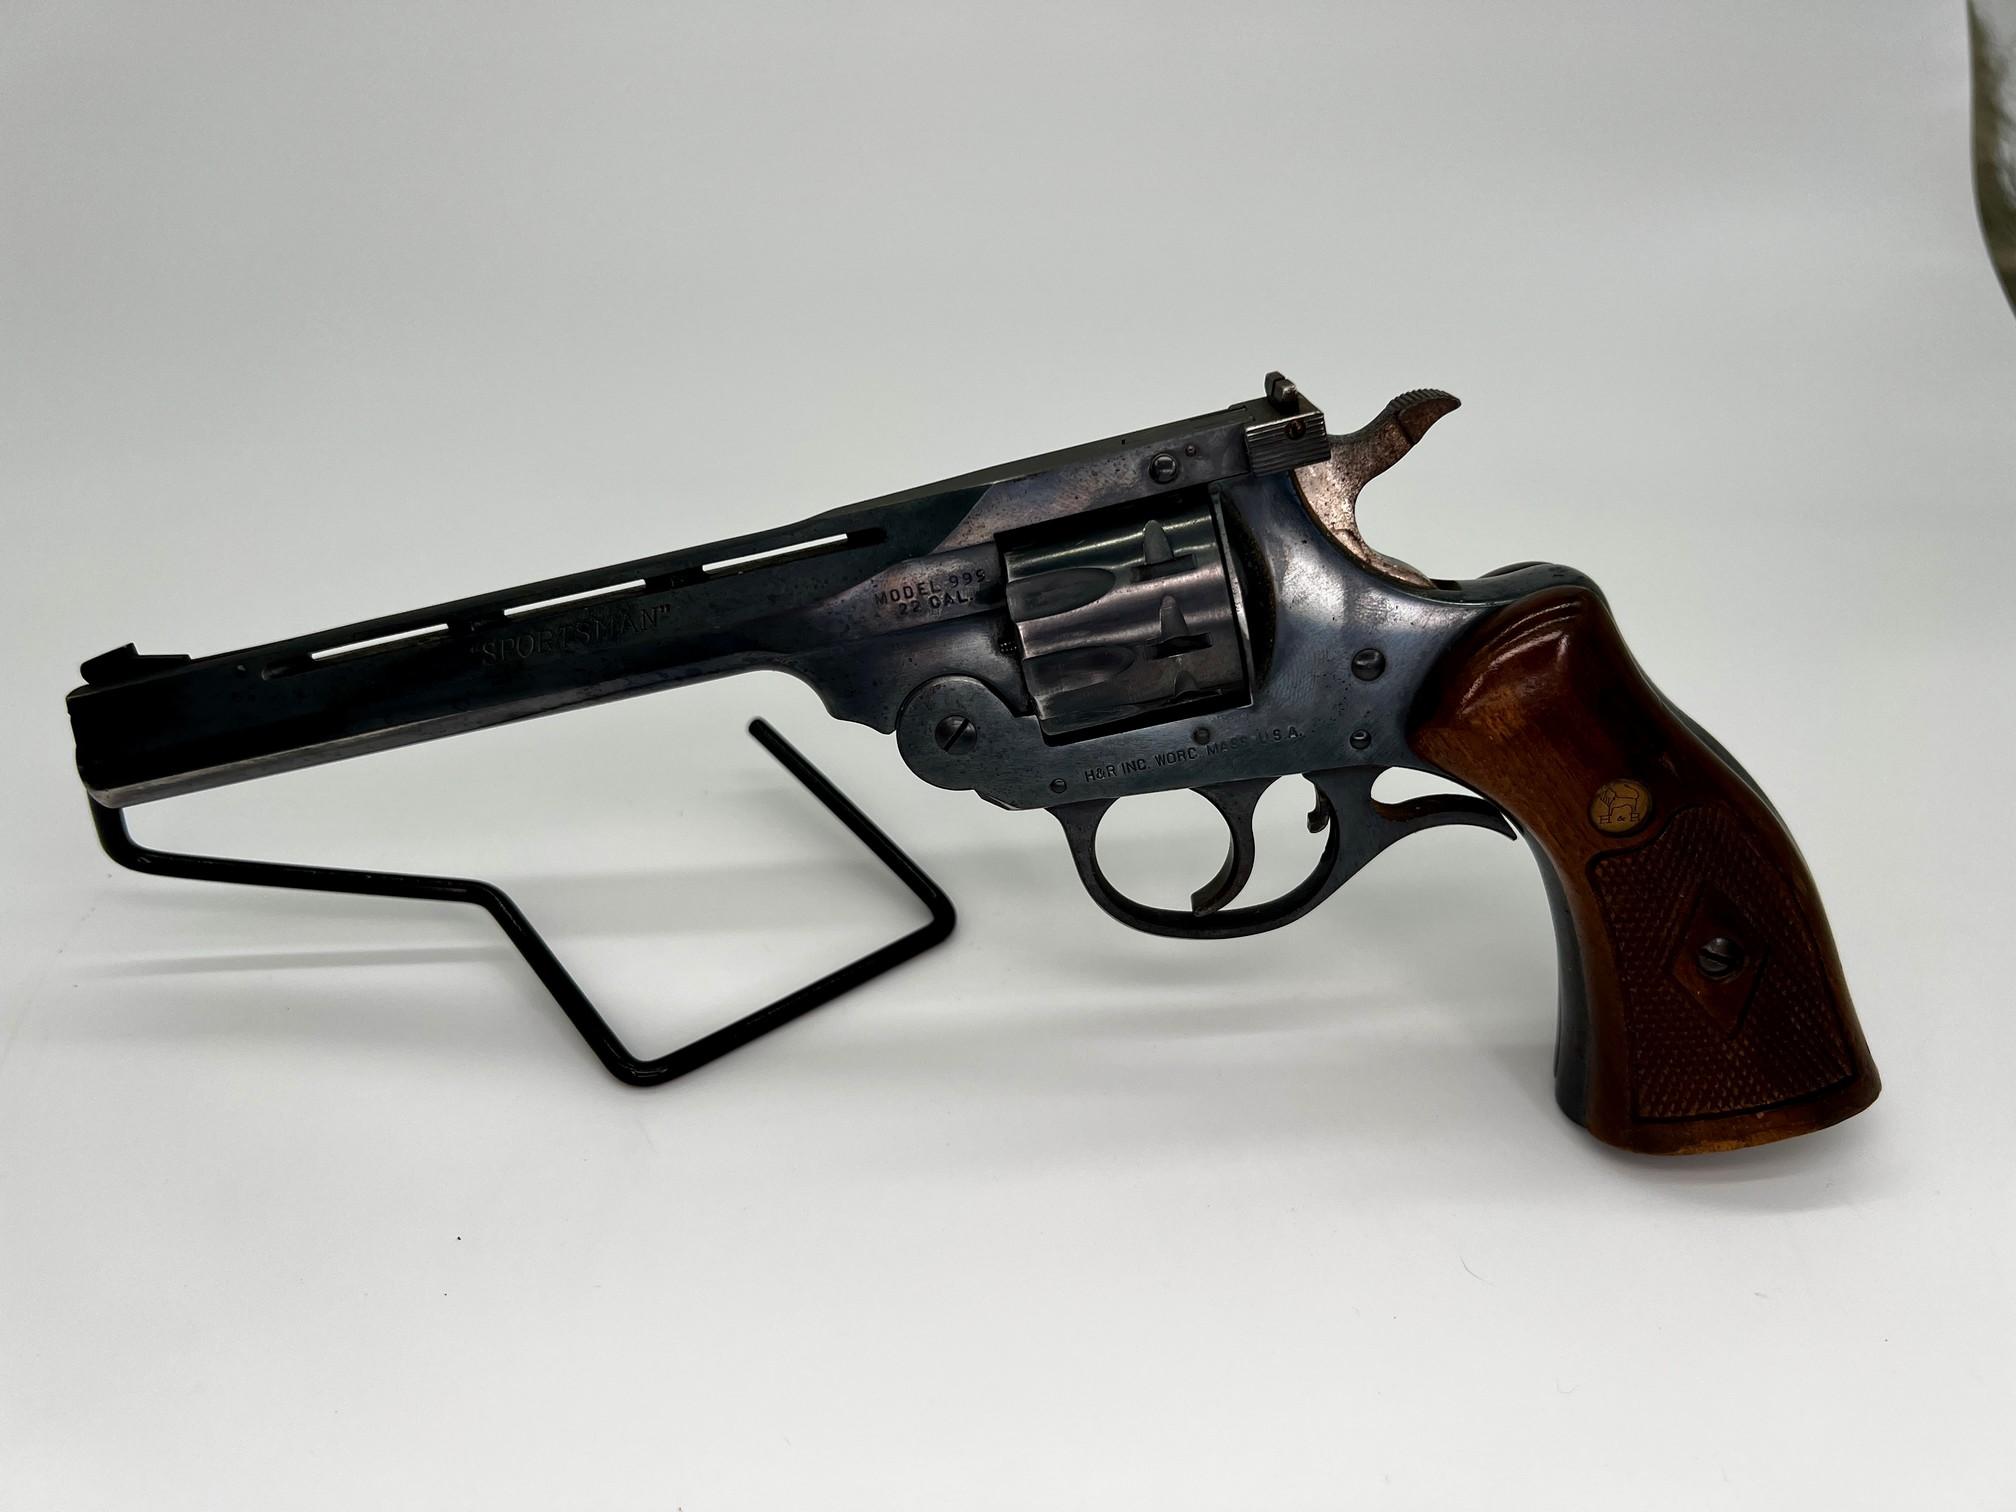 H & R Sportsman Model 999 DA revolver 22LR cal.